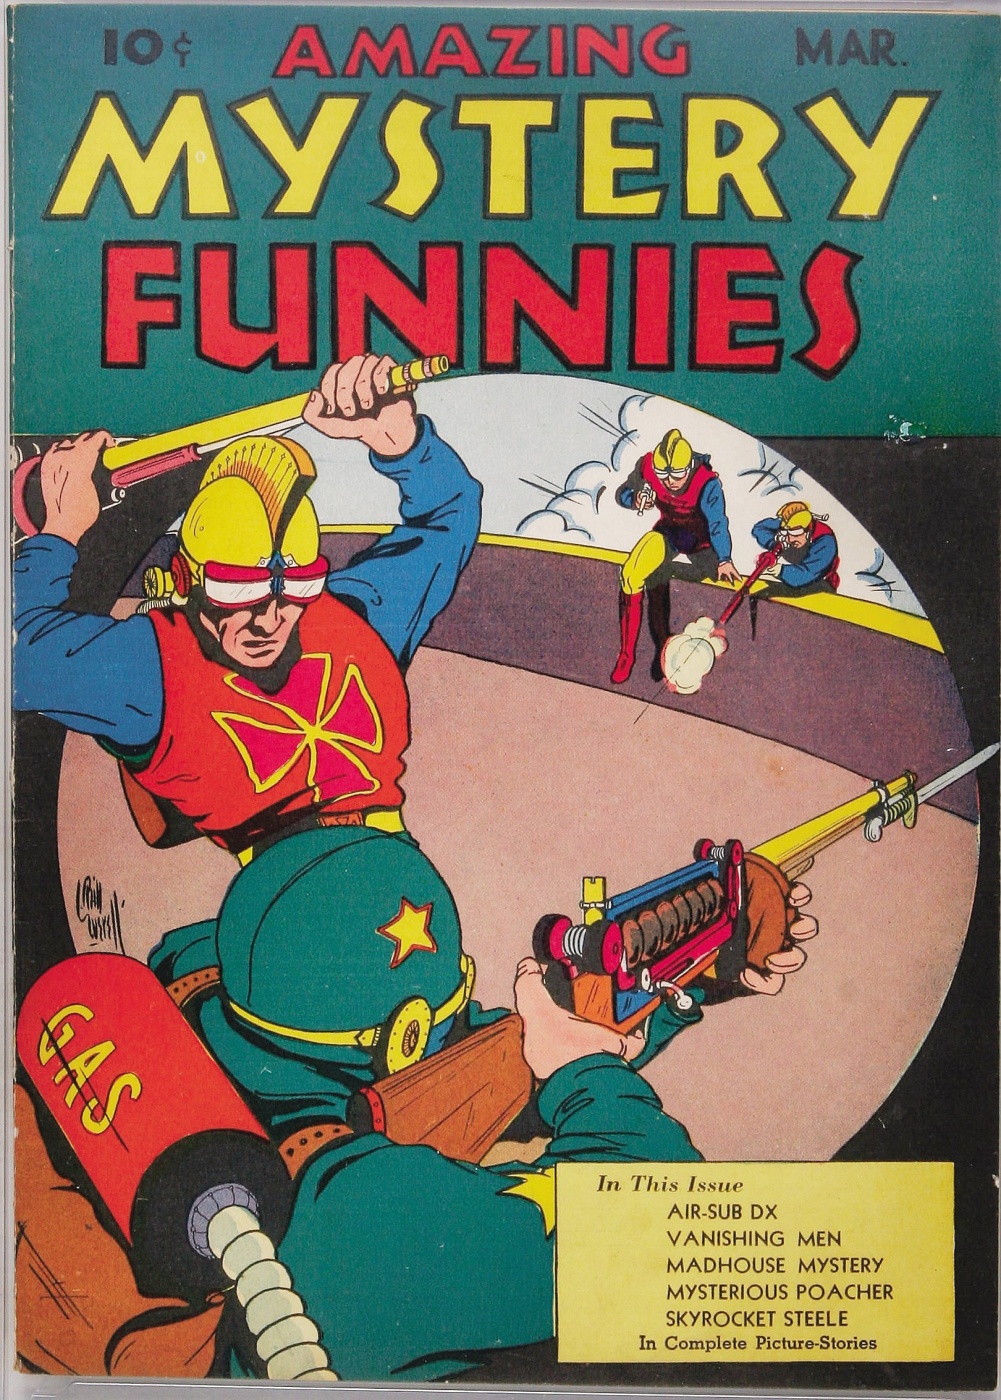 Amazing-Mystery- Funnies-Comics (c) (1)